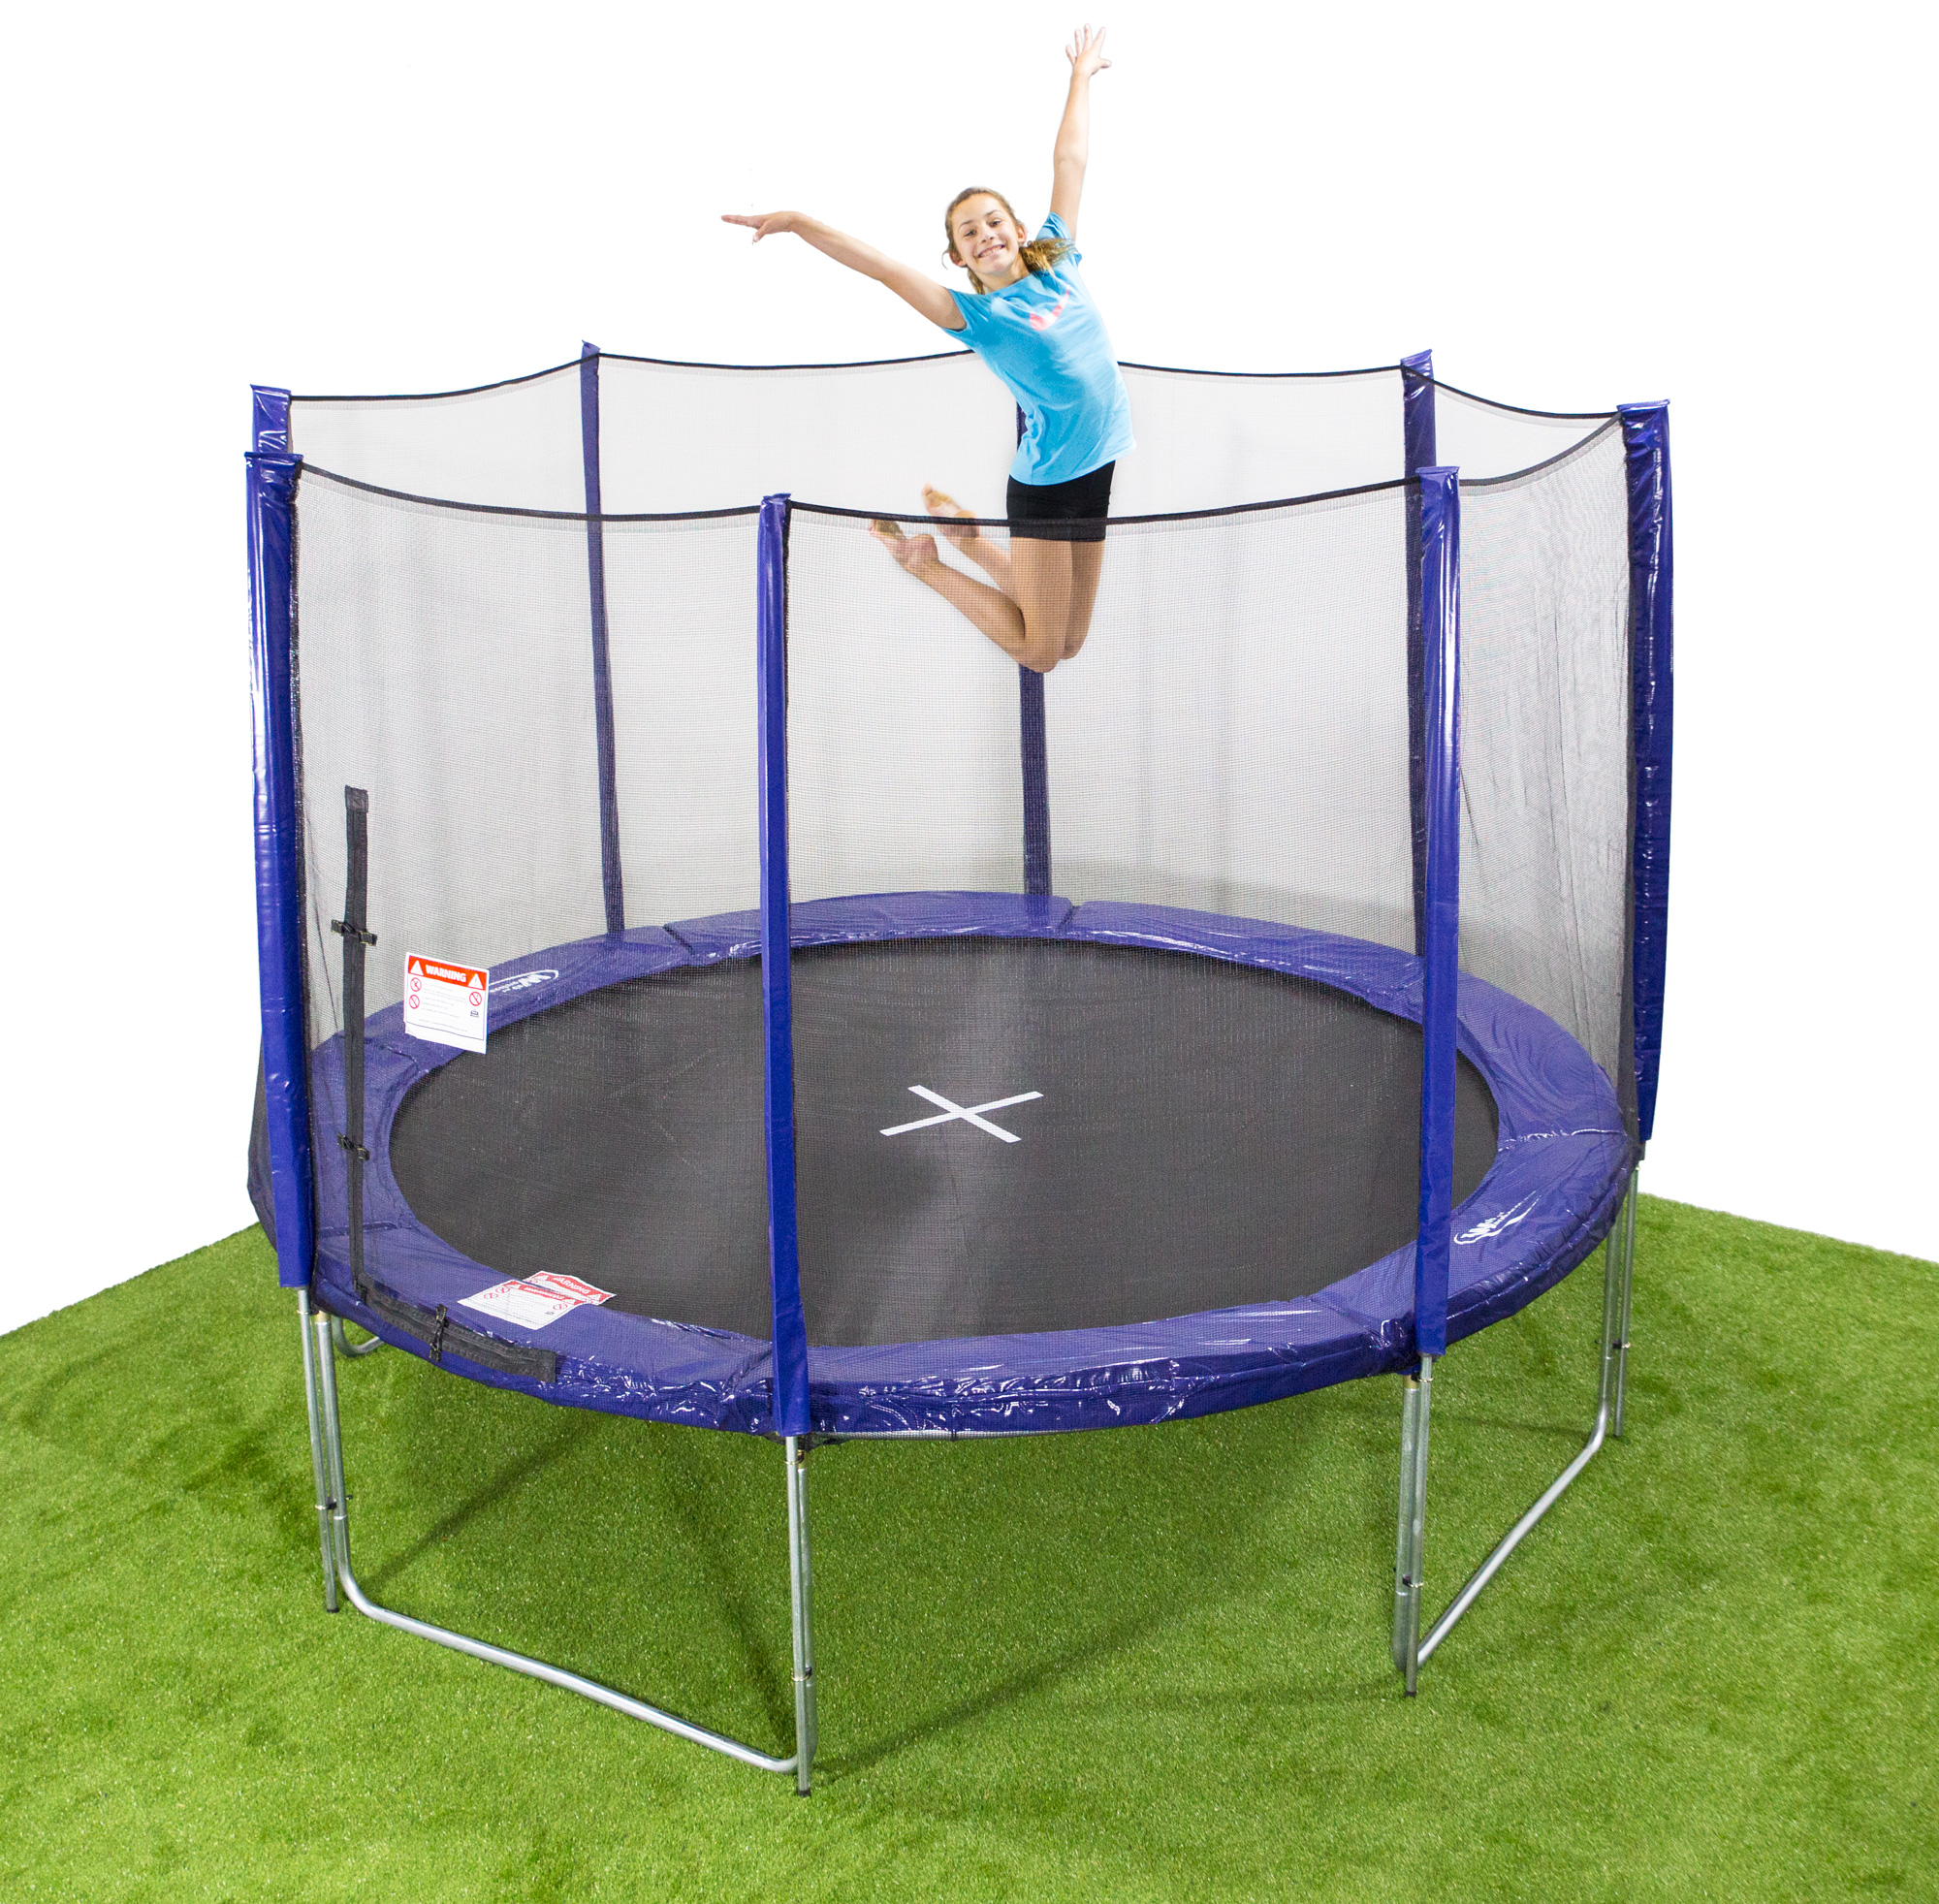 trampoline-net-on-trampoline-with-australian-girl-jumping